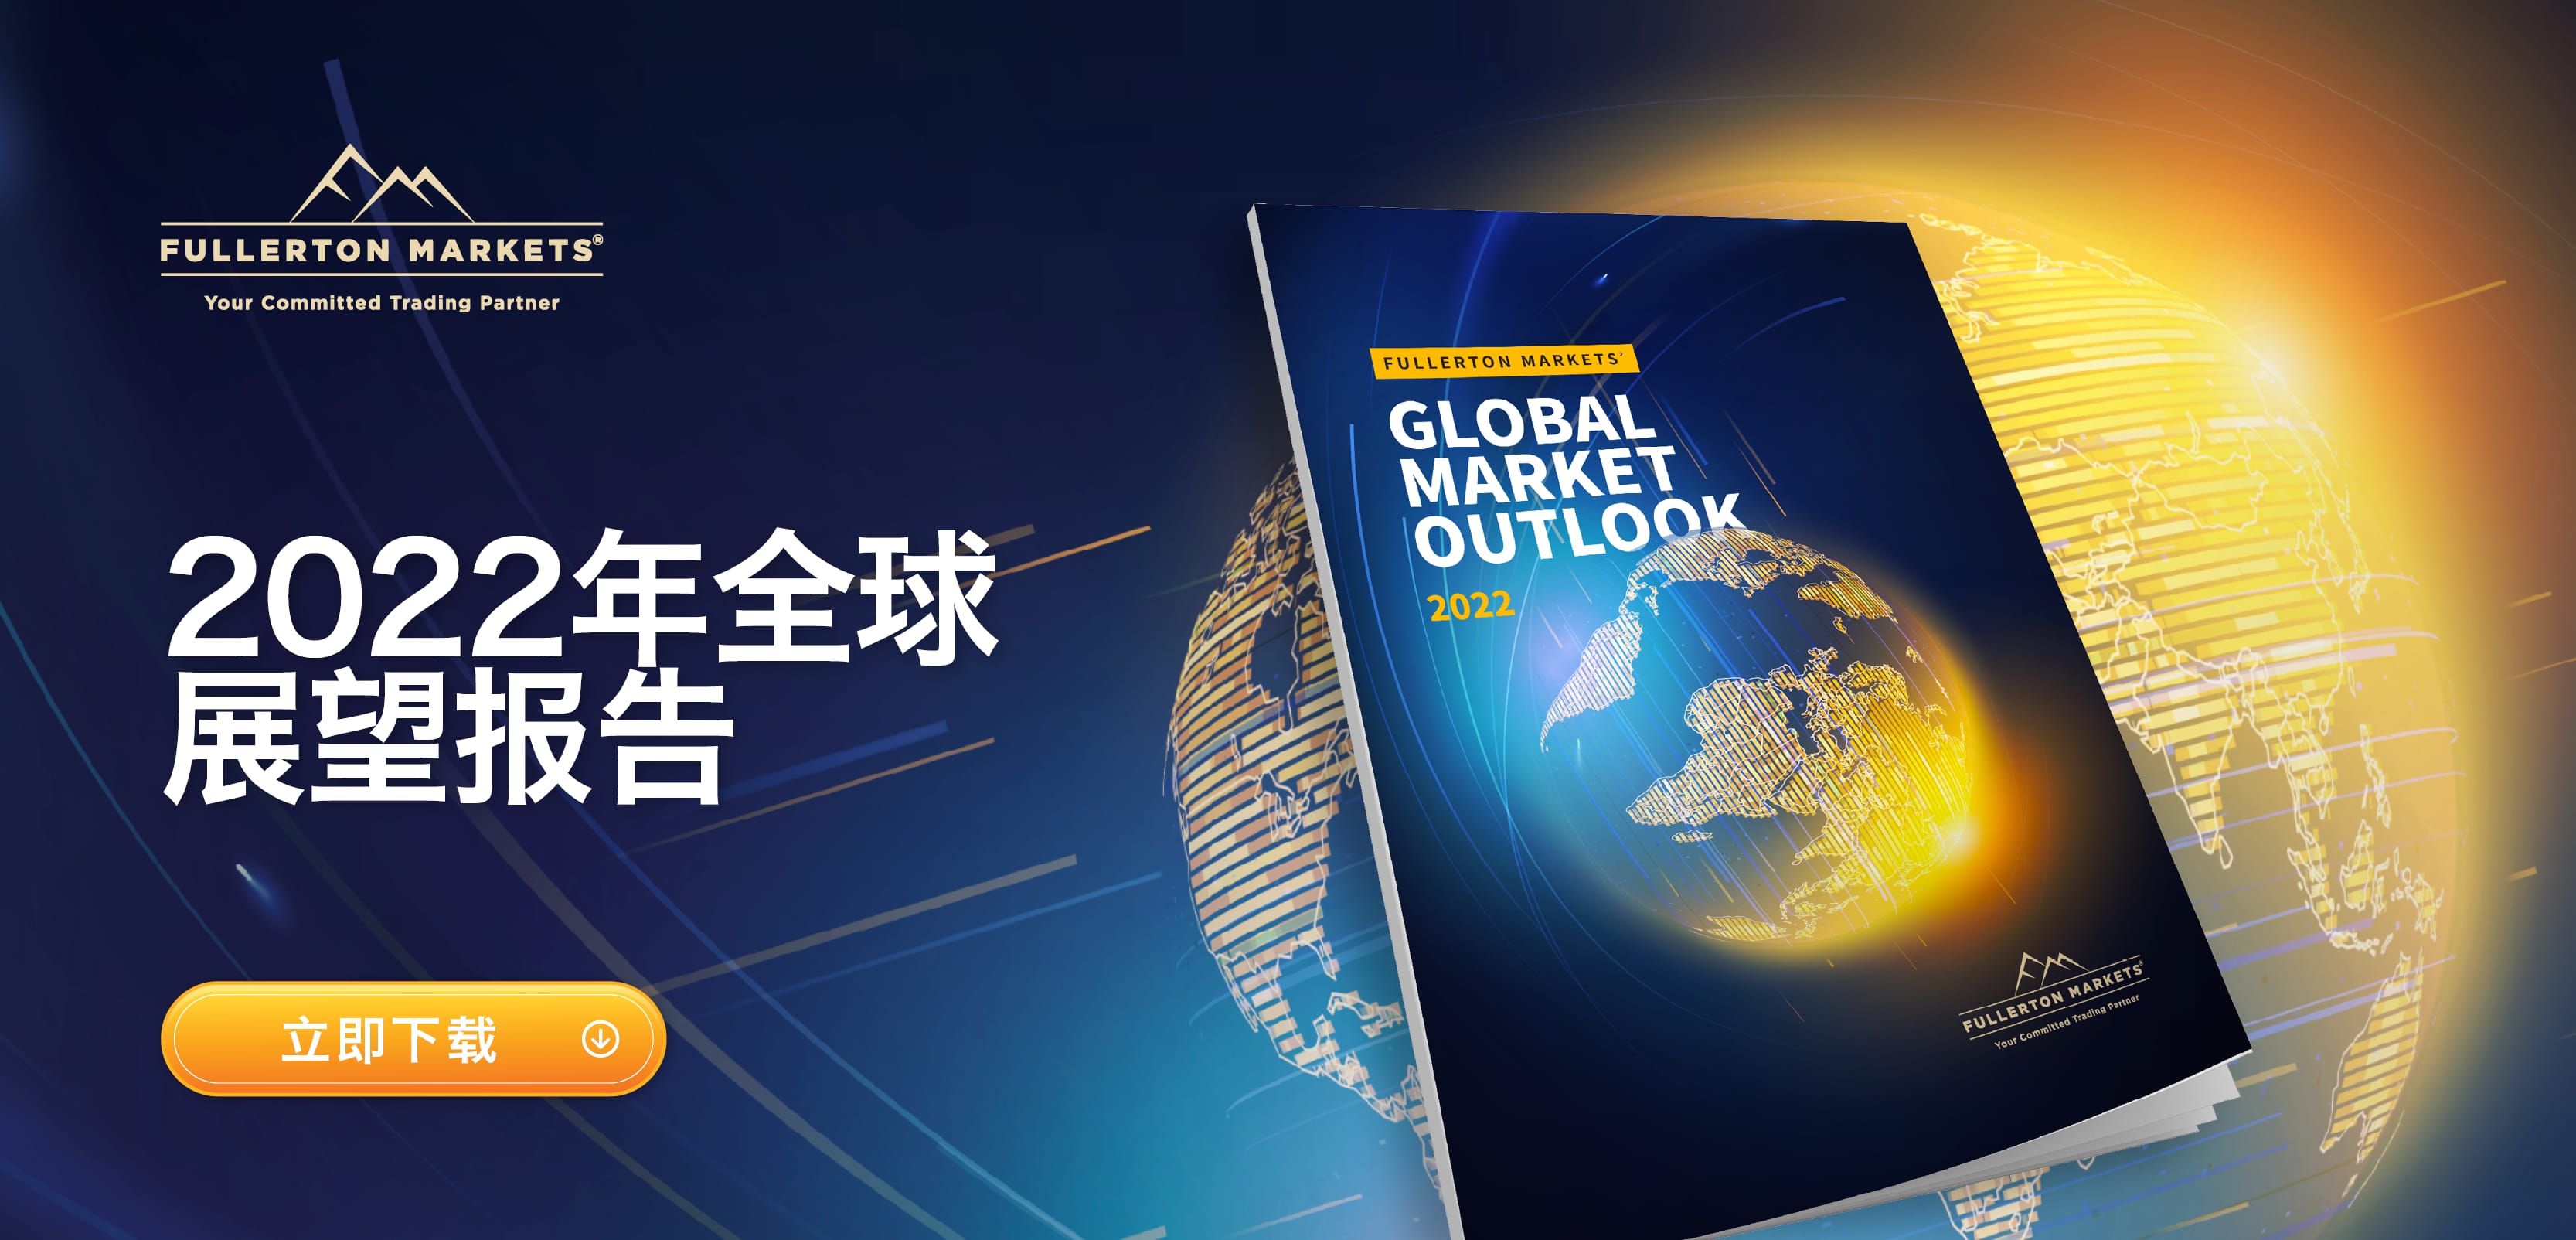 Gold Market Outlook Report 2022_1600x770px_CN